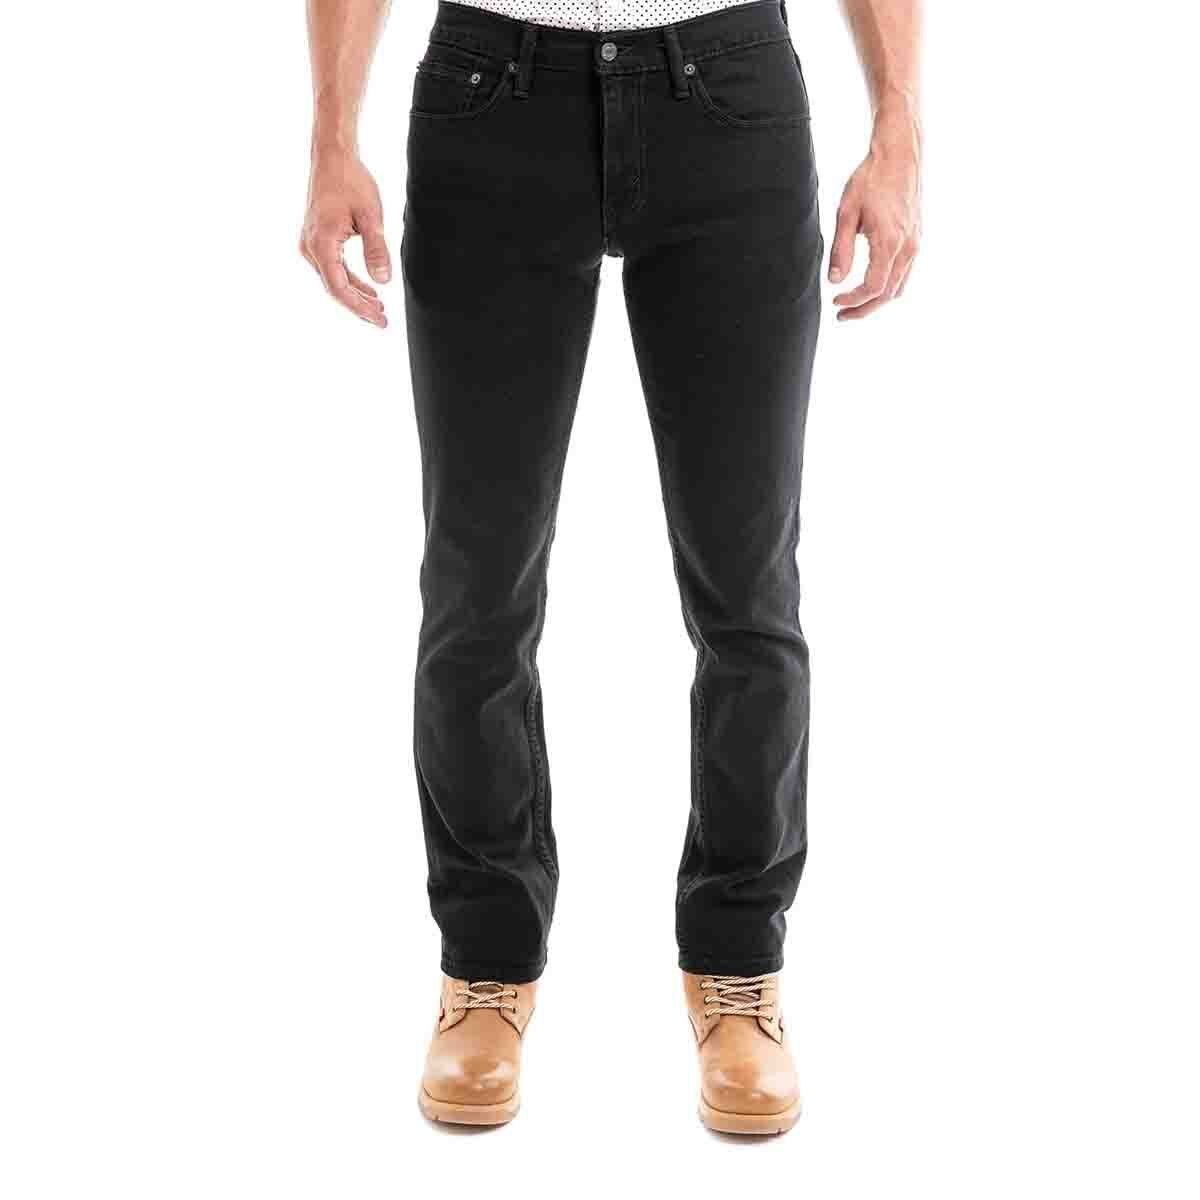 Pantalon 511 Slim Fit Color Negro Levi S Para Caballero Sears